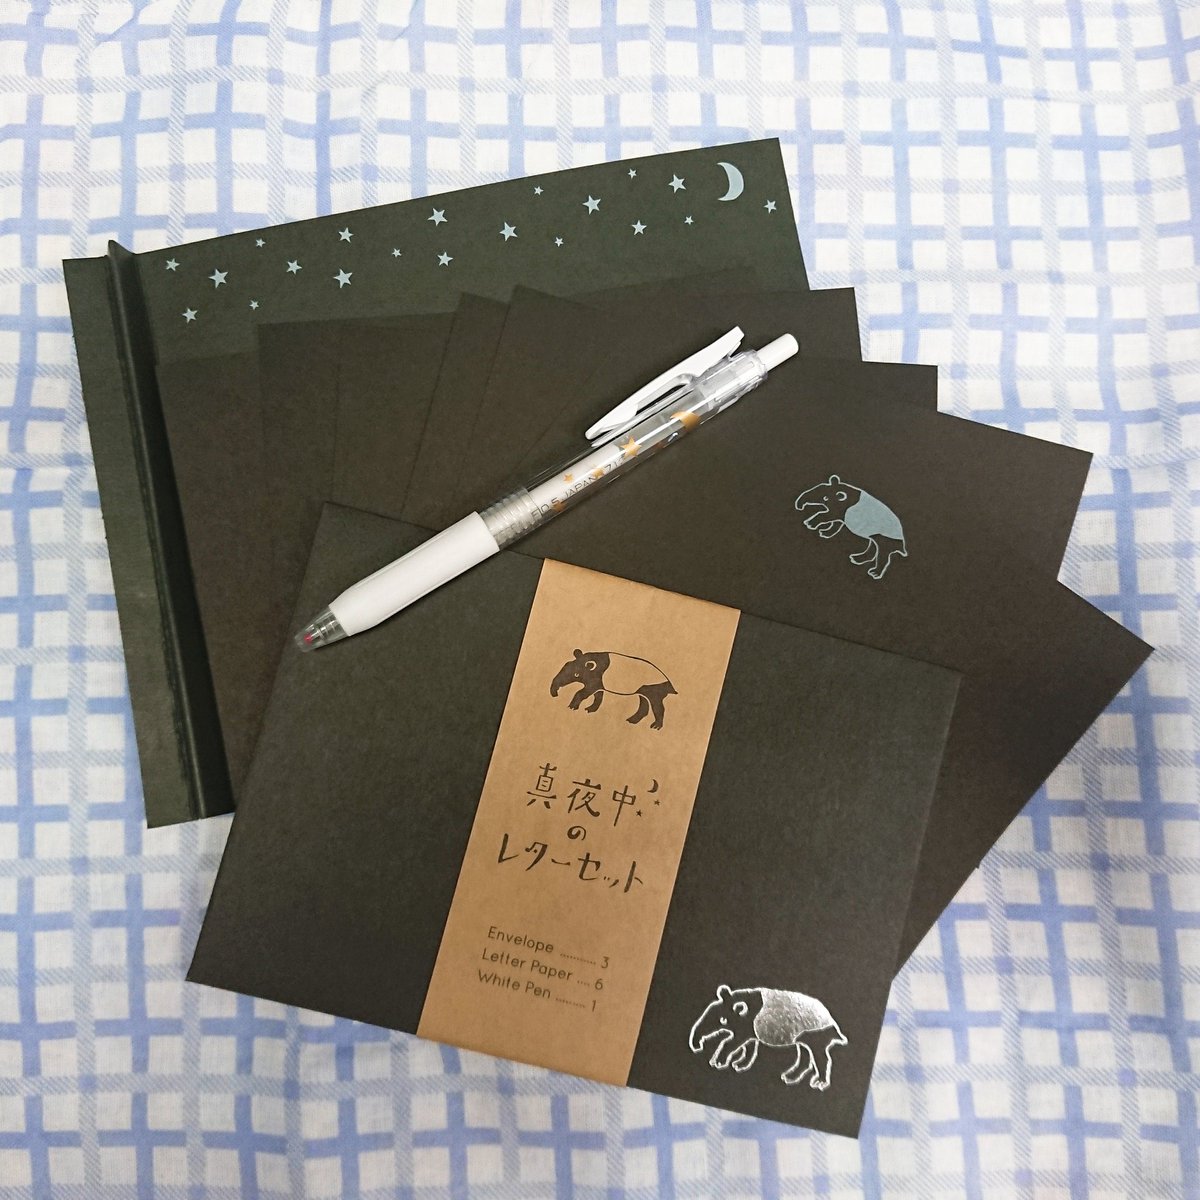 ট ইট র 文具女子博 7月に名古屋で開催 連日文具女子博petit大阪開催にたくさんのご反応をいただきありがとうございます 今日はプラネタリウムで出会ったすてきなレターセットをご紹介します 夜の空のような黒の便箋にメッセージを書けるよう 白いペンもセット